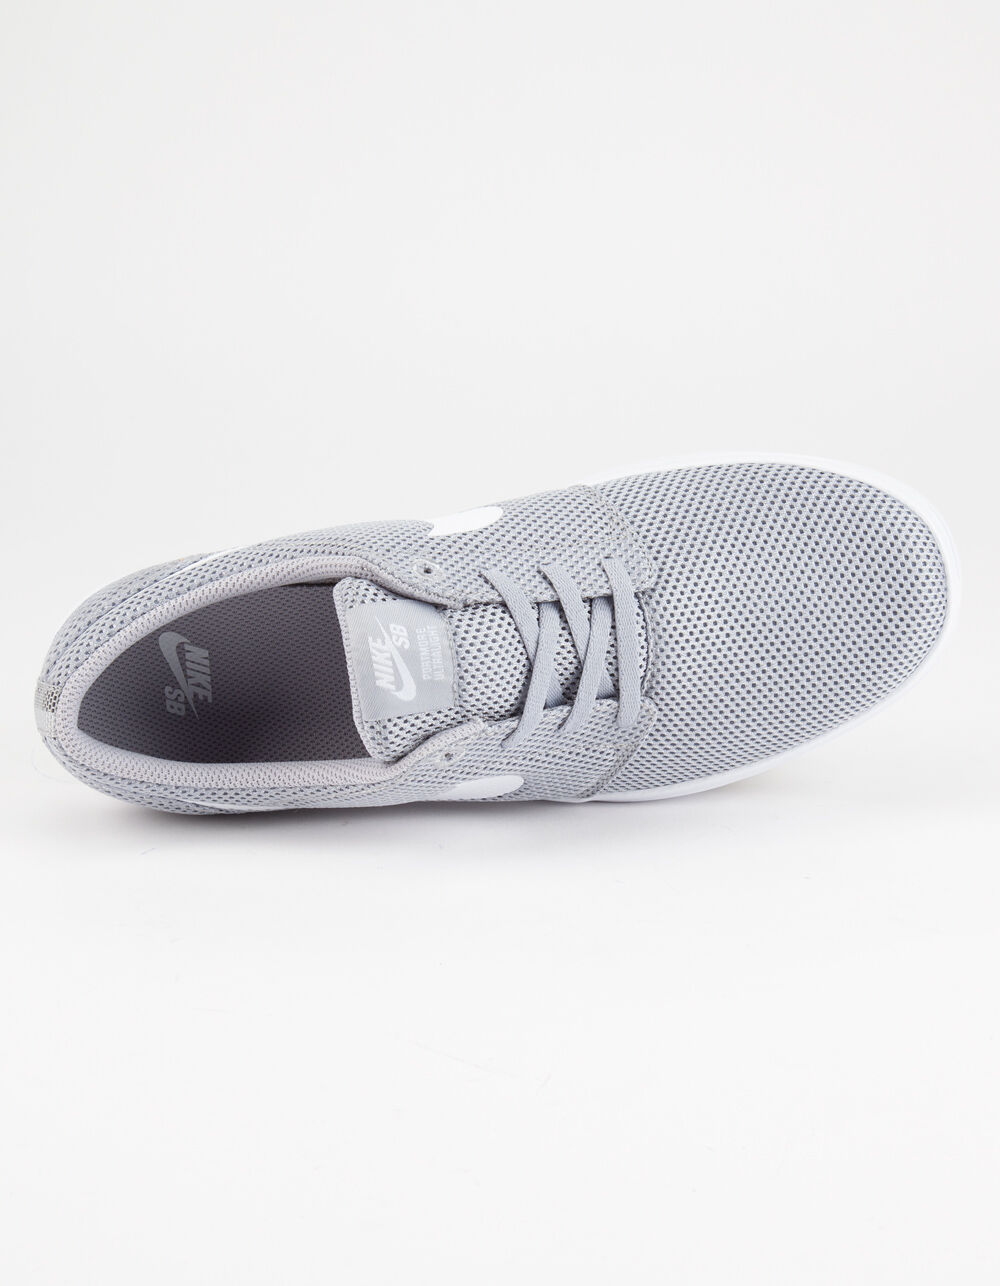 NIKE SB Portmore II Ultralight Wolf Grey & White Shoes image number 2